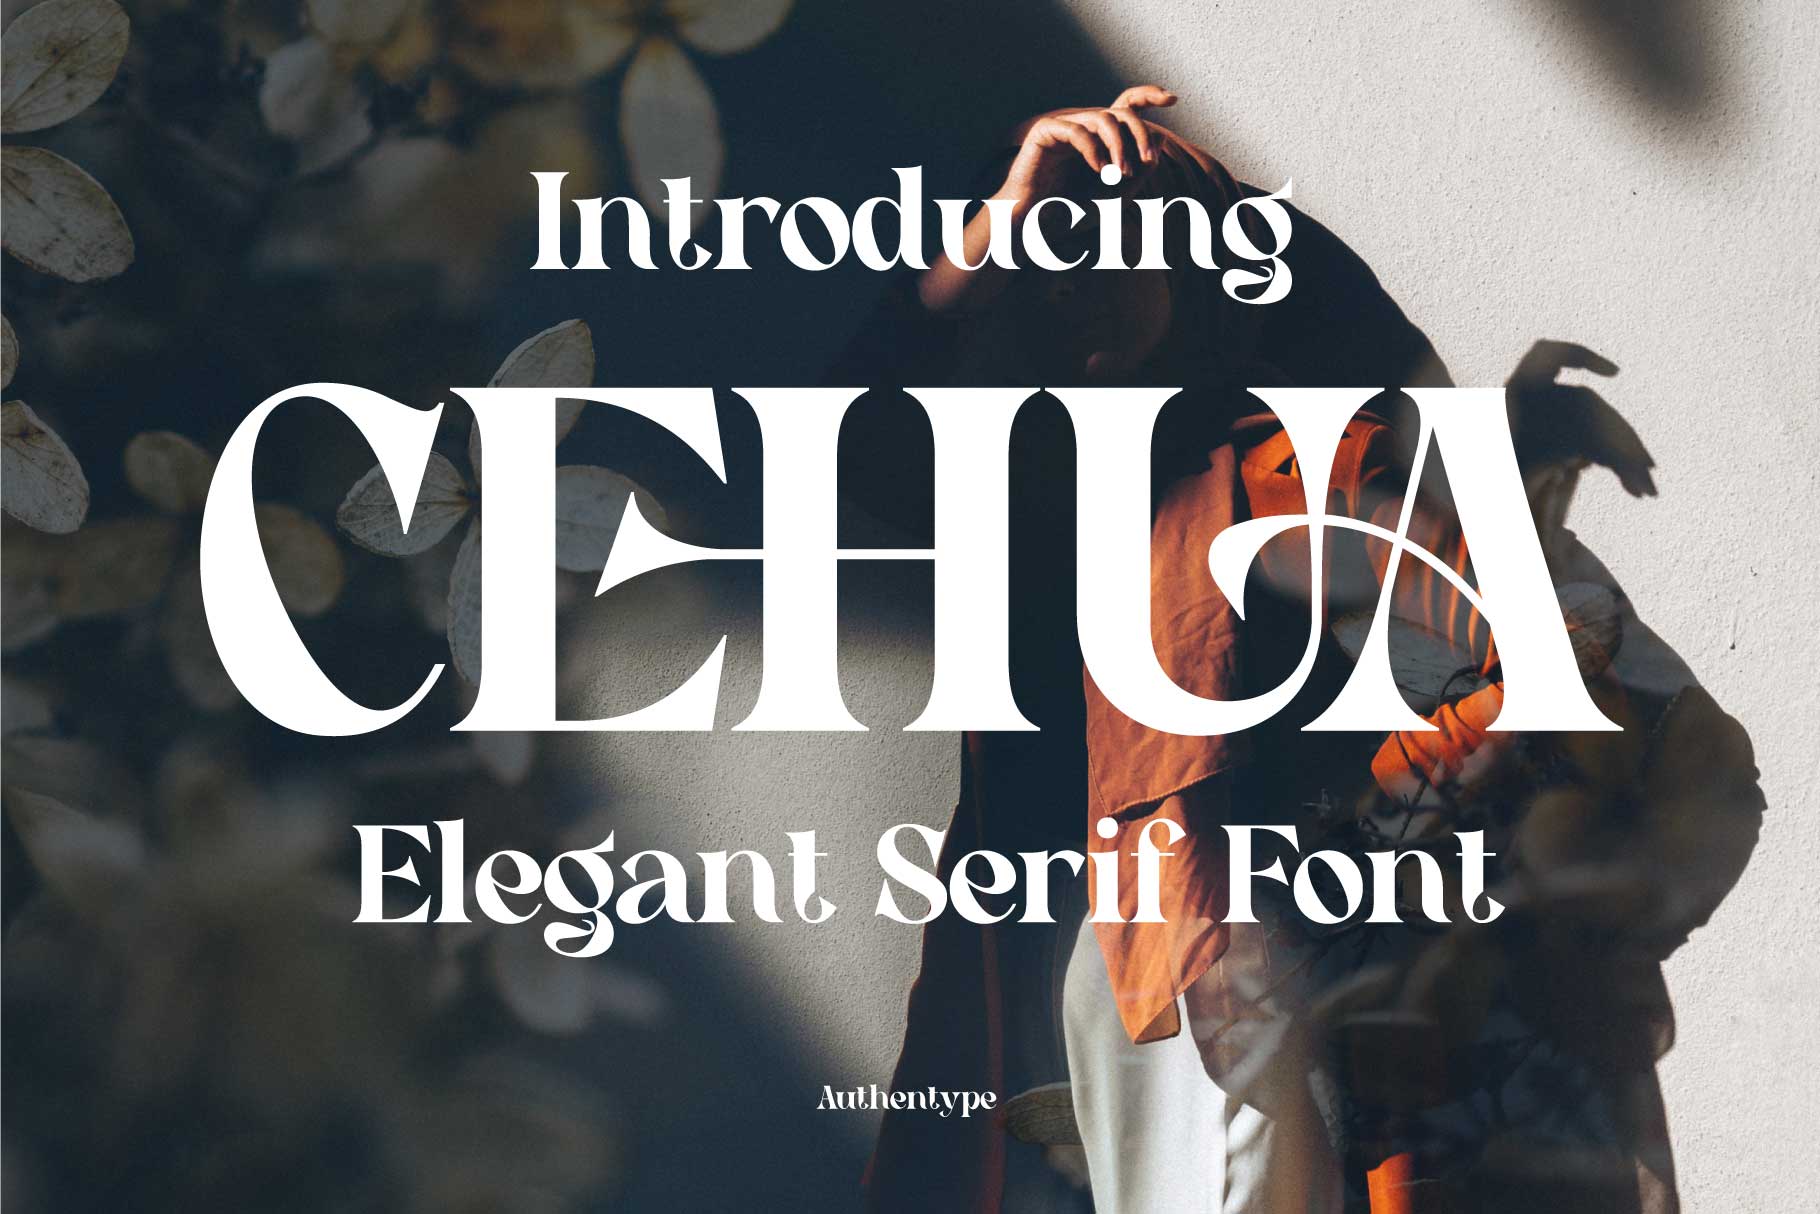 Cehua - Elegant Serif Font